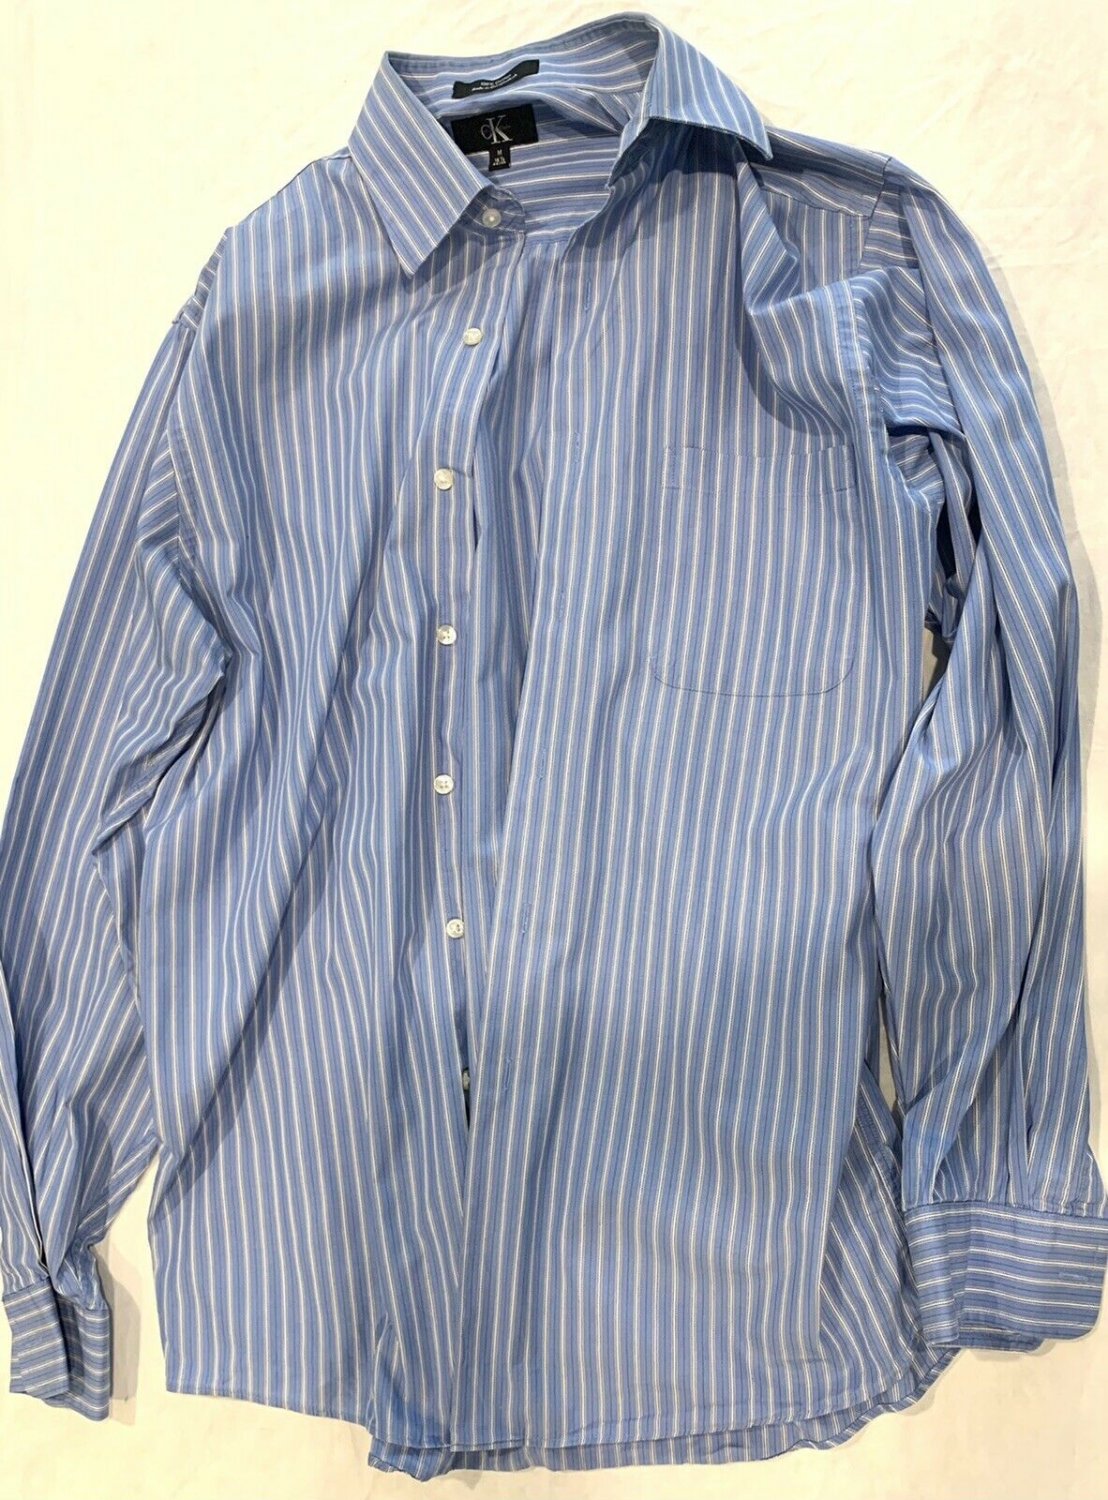 6 Men’s Long Sleeve Buttoned Down Dress Shirts (15.5” x 34/35”)